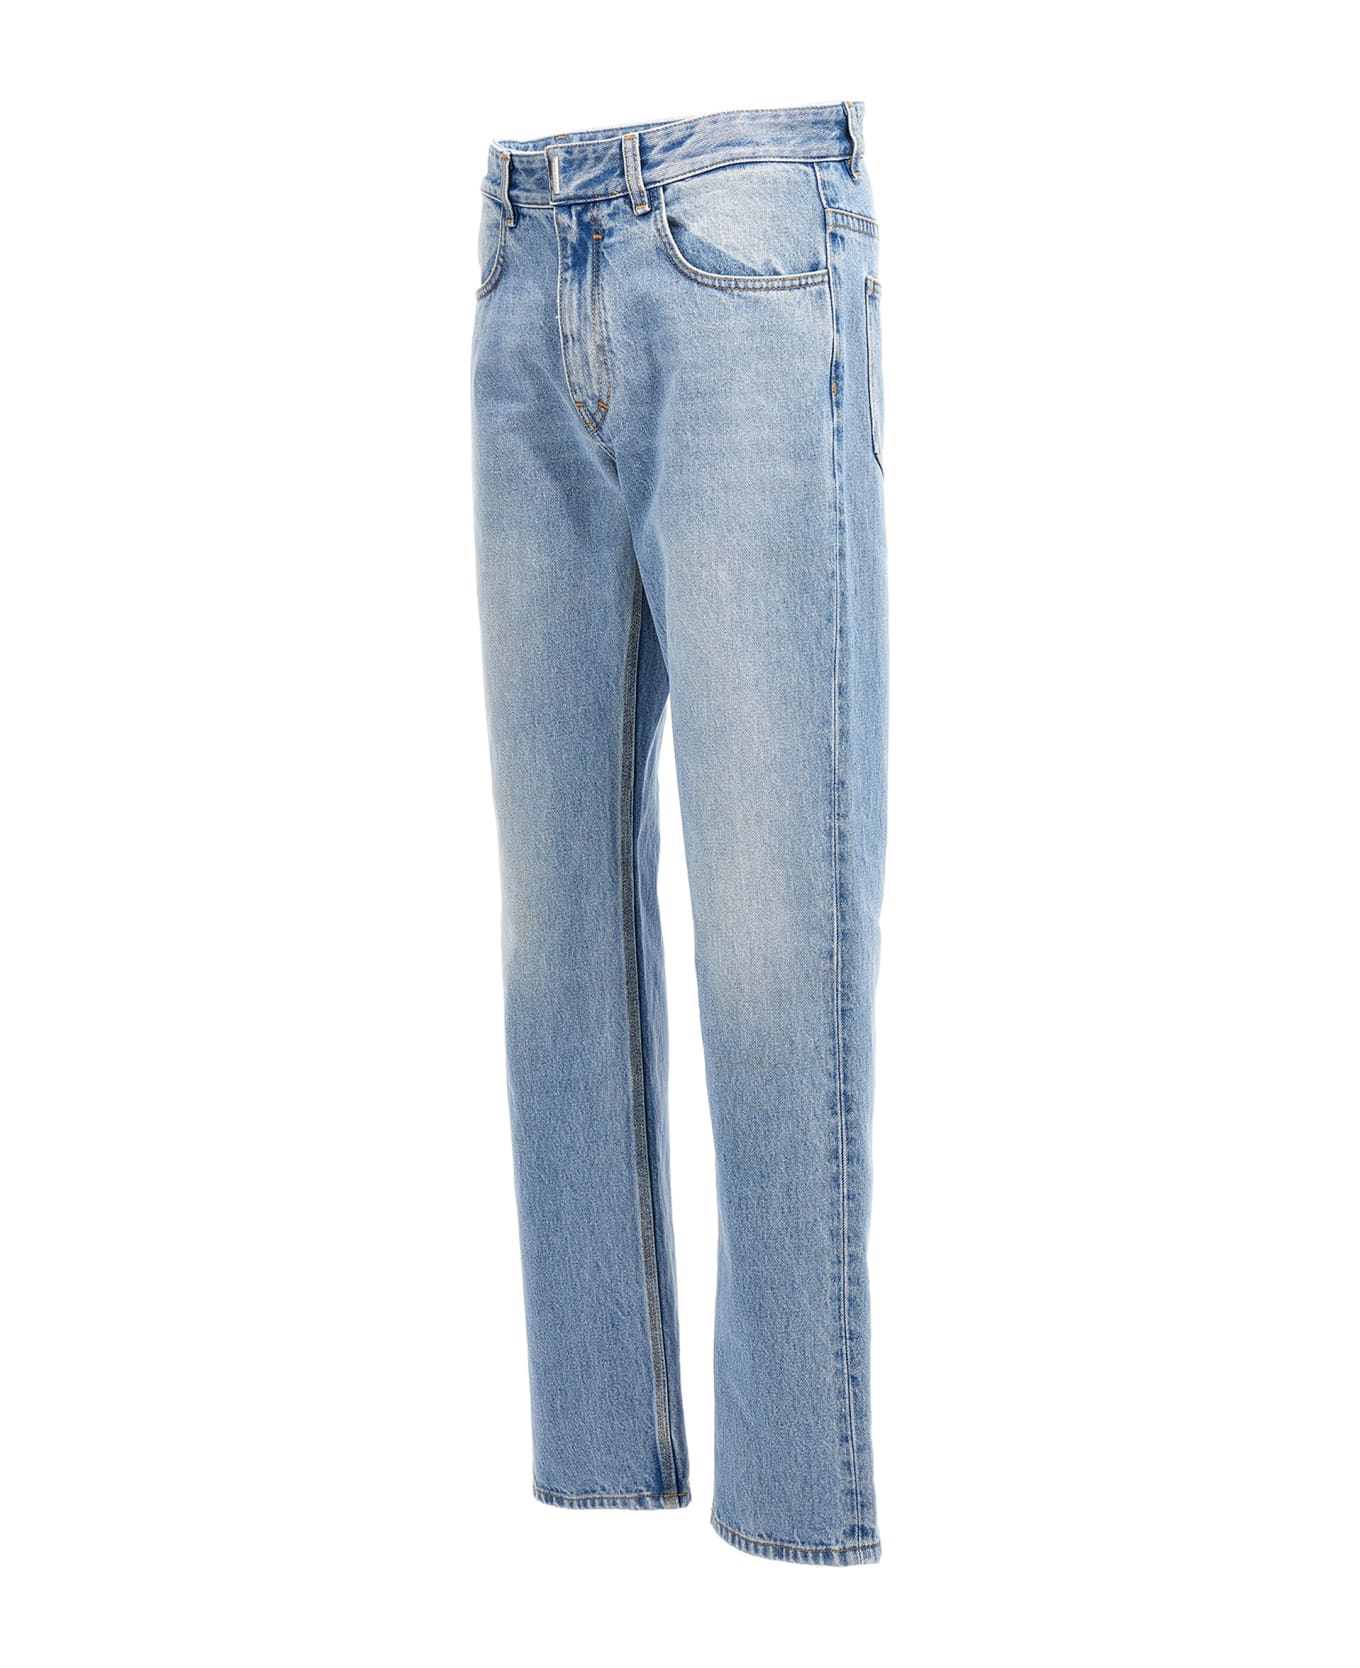 Givenchy Denim Jeans - LIGHT BLUE デニム